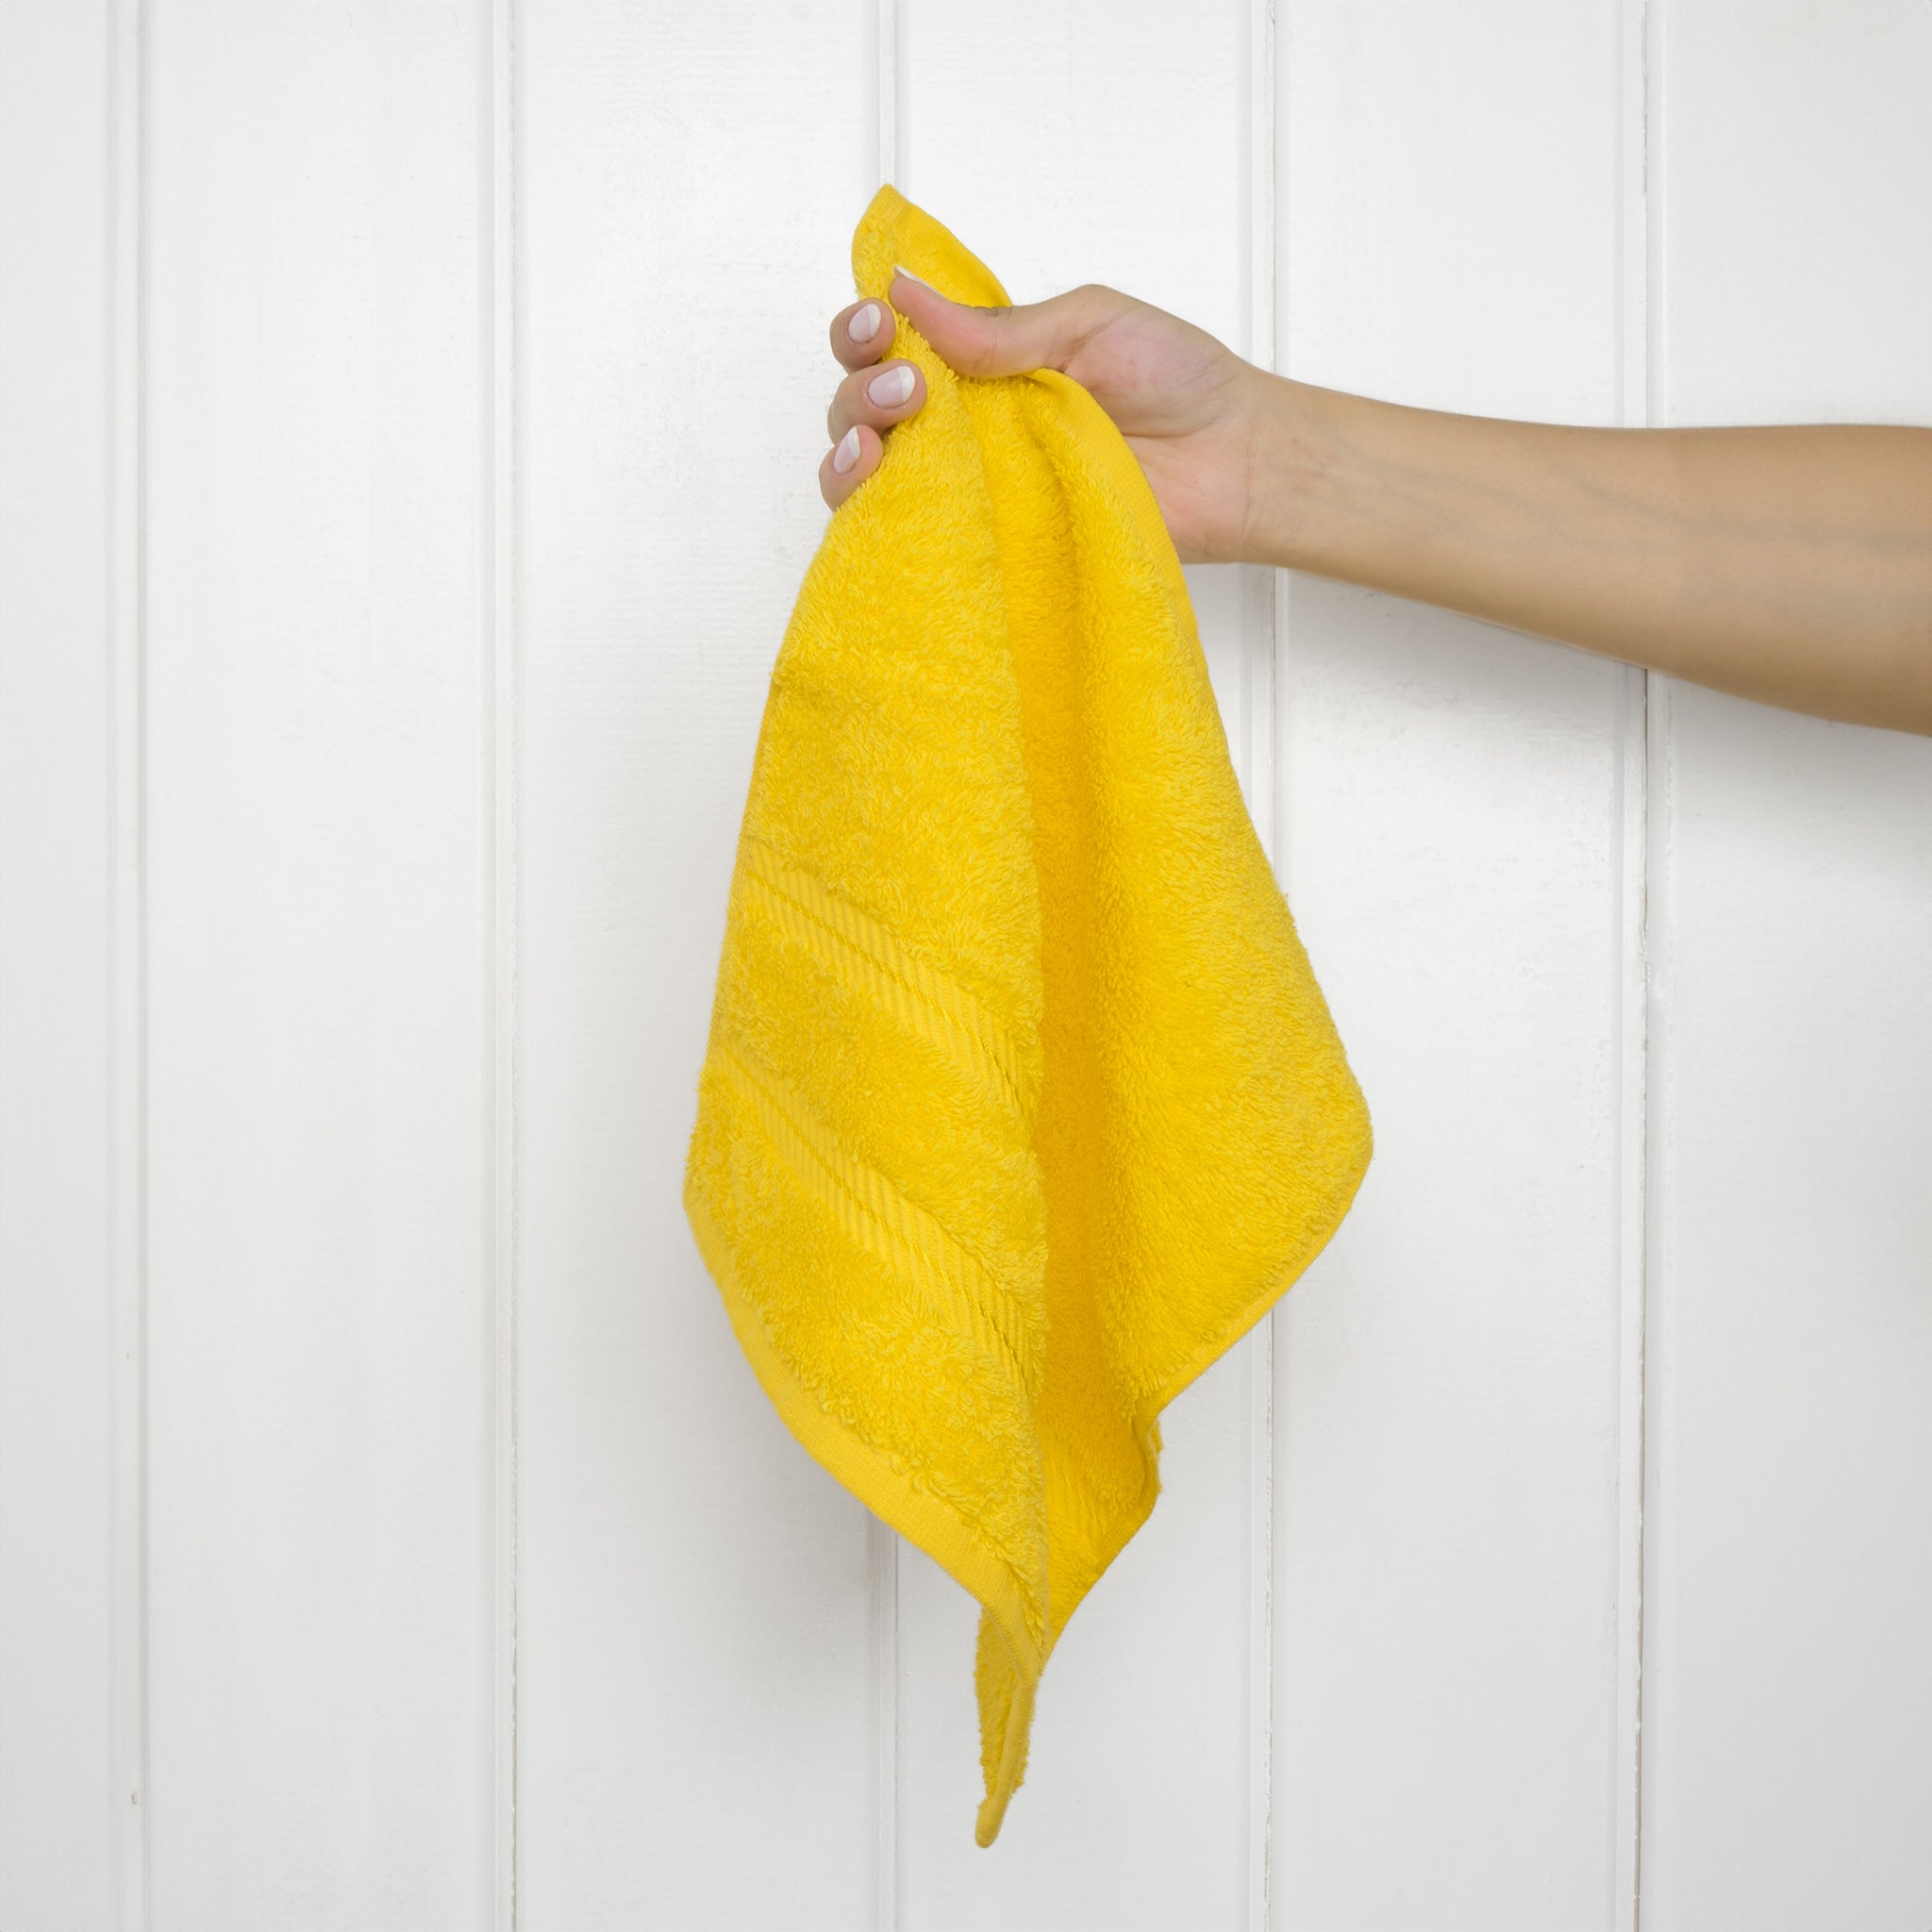 American Soft Linen 100% Turkish Cotton 4 Piece Washcloth Set malibu-yellow-2